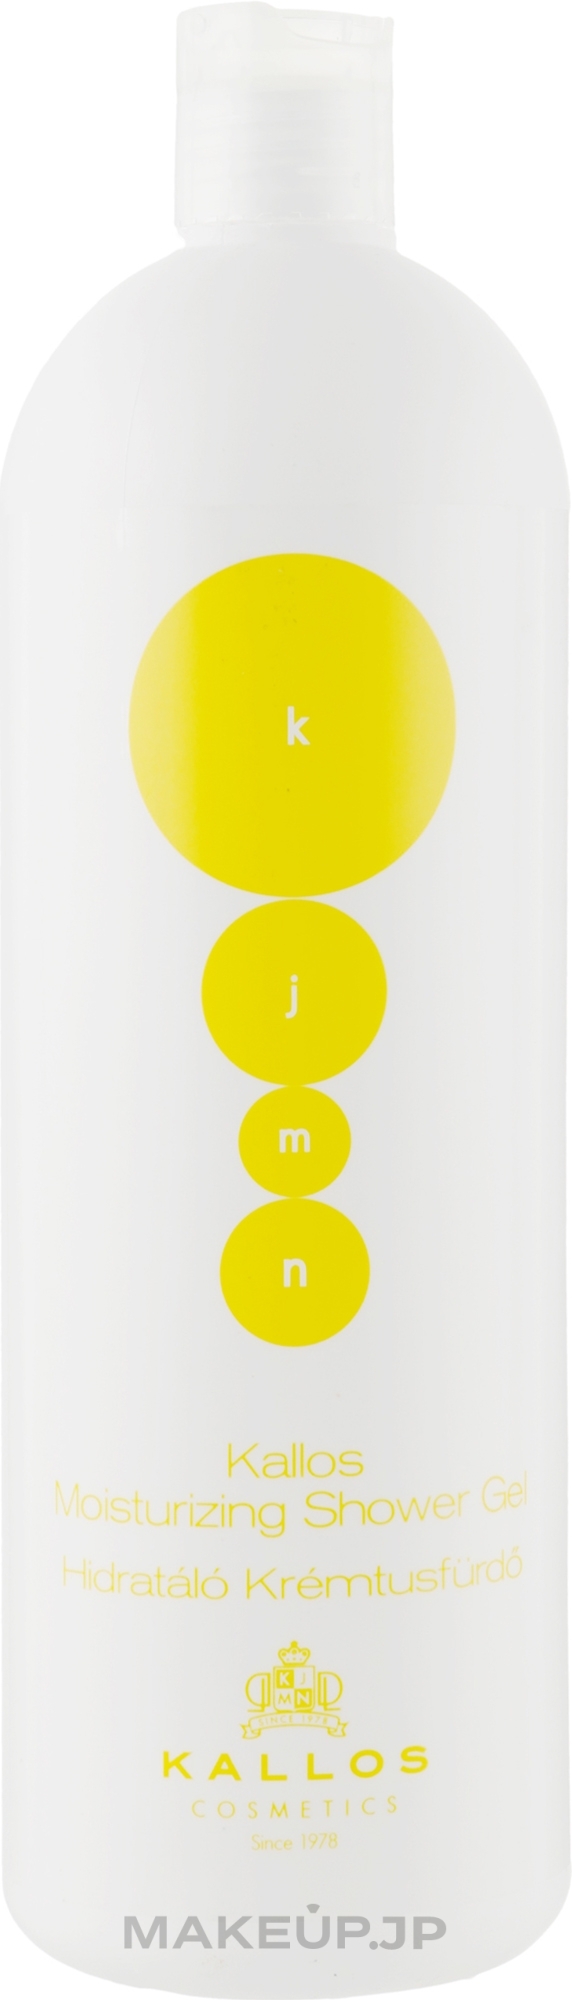 Moisturizing Shower Gel with Mandarine Aroma - Kallos Cosmetics KJMN Moisturizing Shower Gel — photo 1000 ml